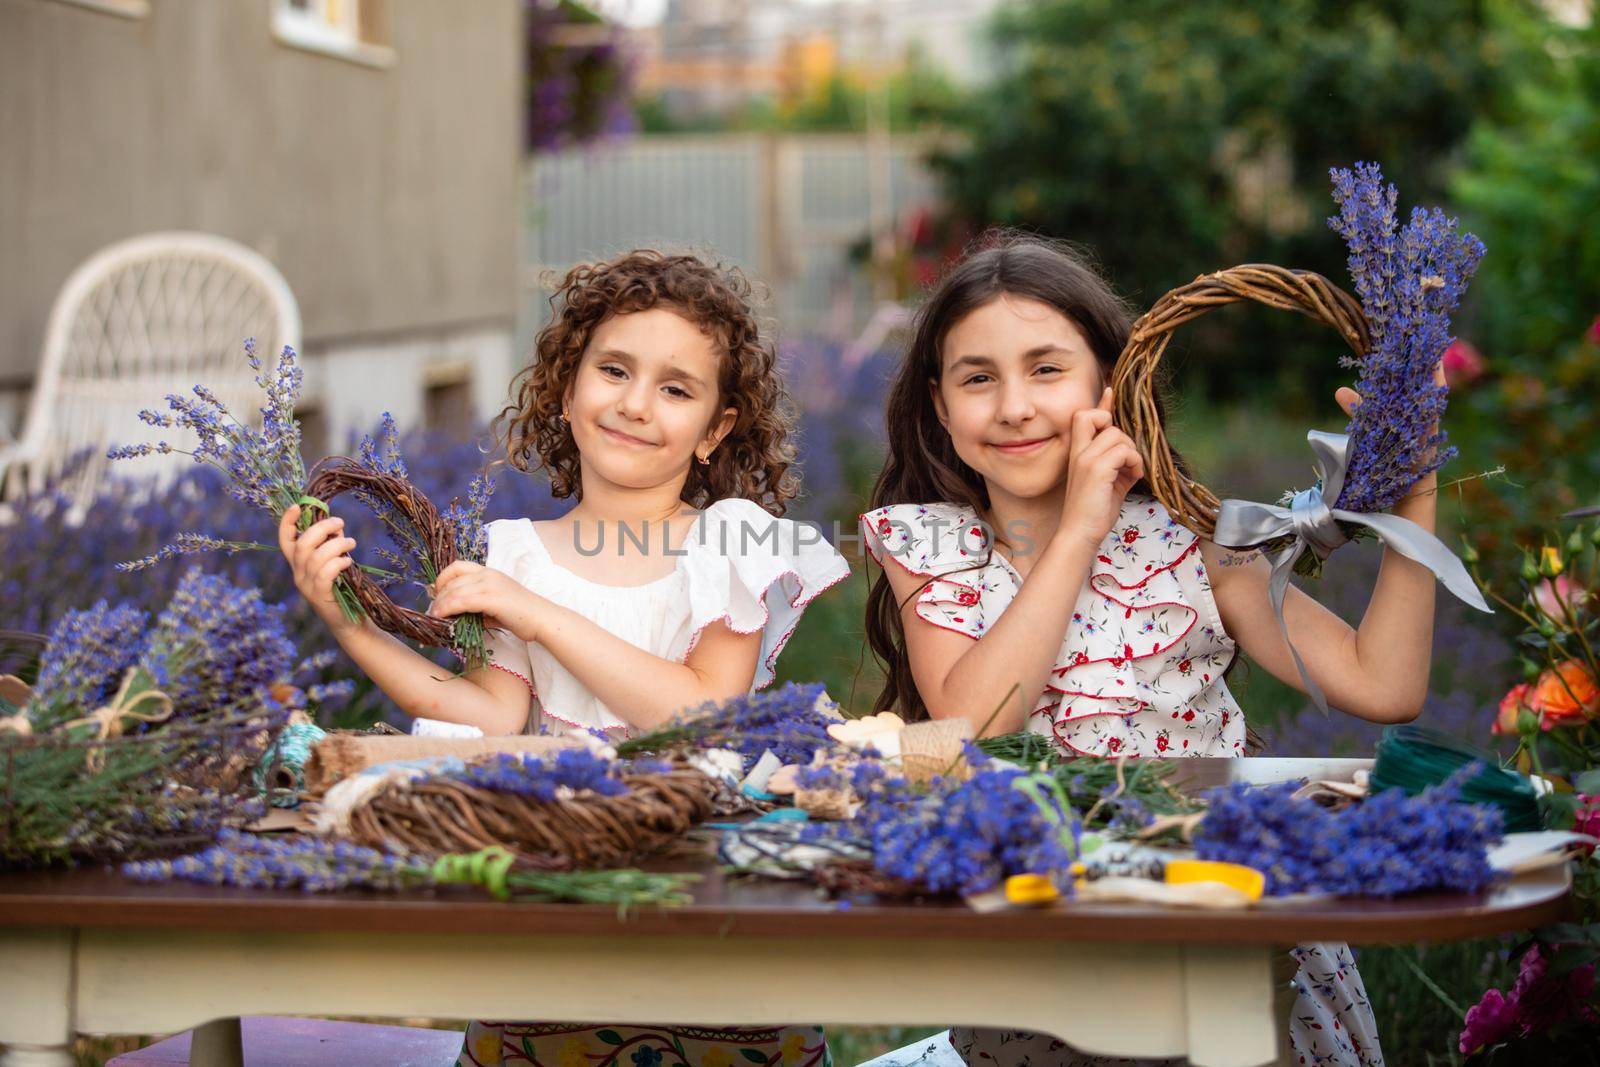 Girls make homemade lavender wreaths as a decor by oksix